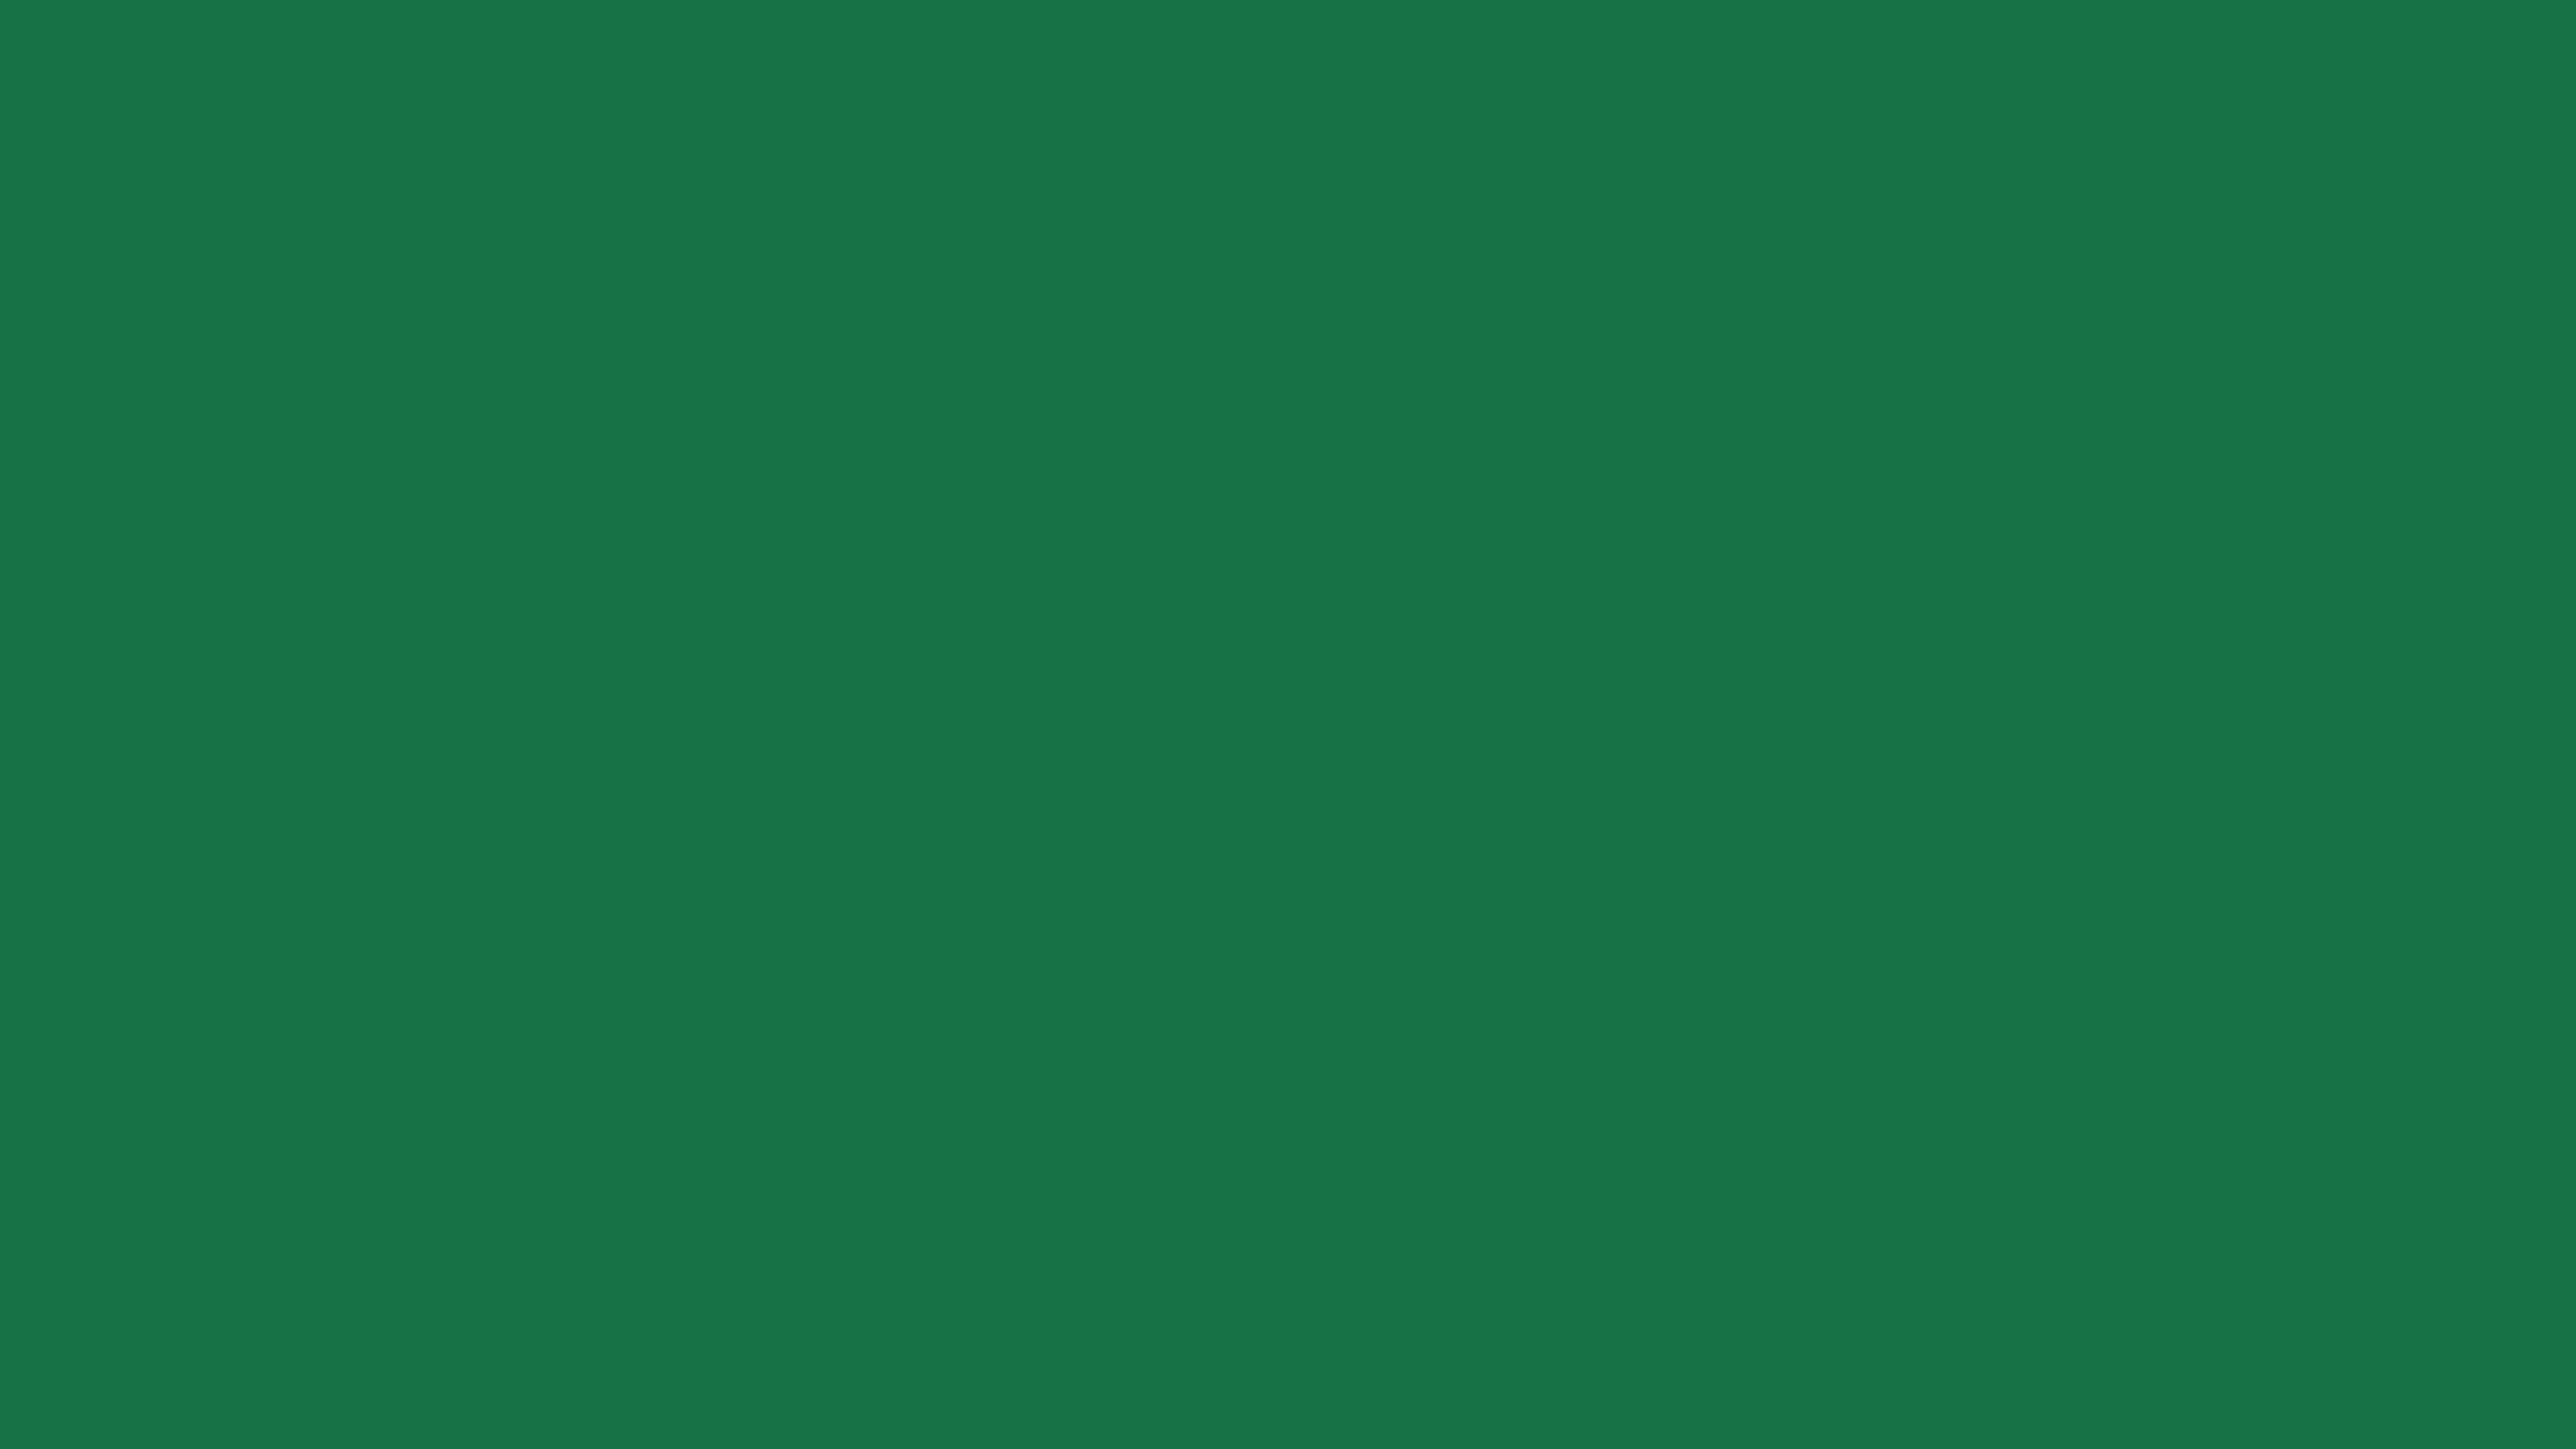 3840x2160 Dark Spring Green Solid Color Background